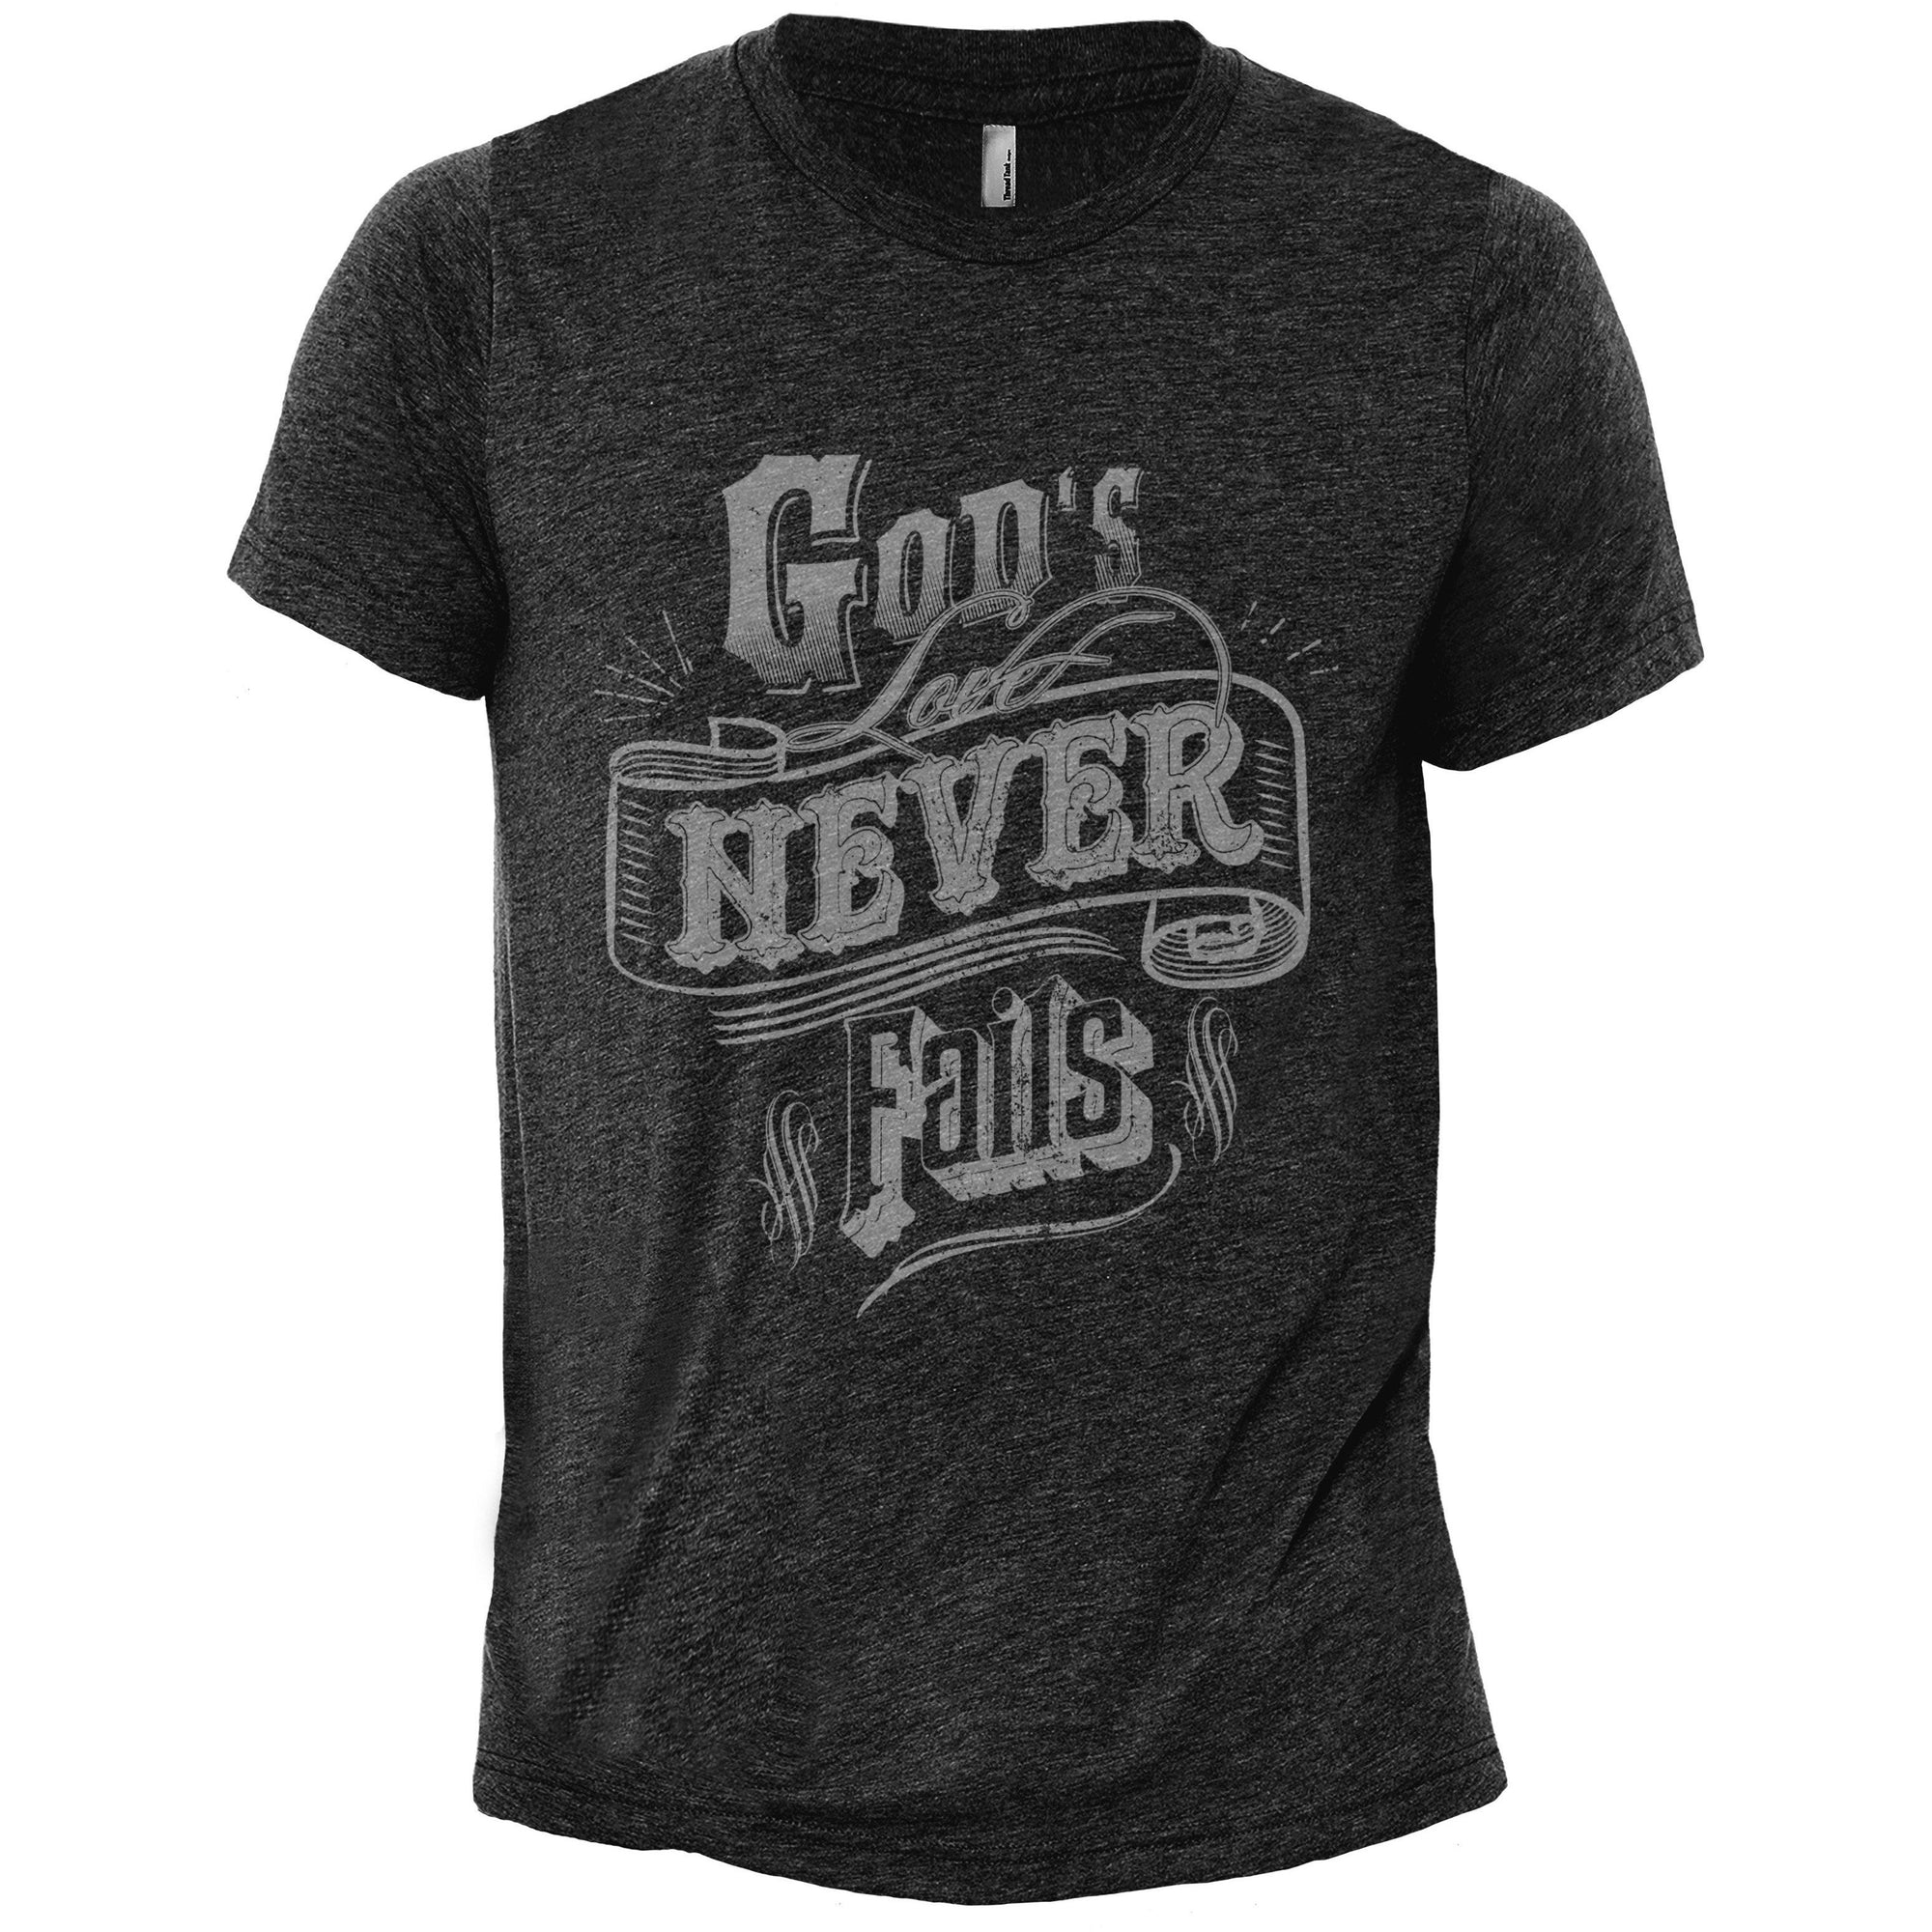 Gods Love Never Fails Heather Grey Printed Graphic Men's Crew T-Shirt Tee